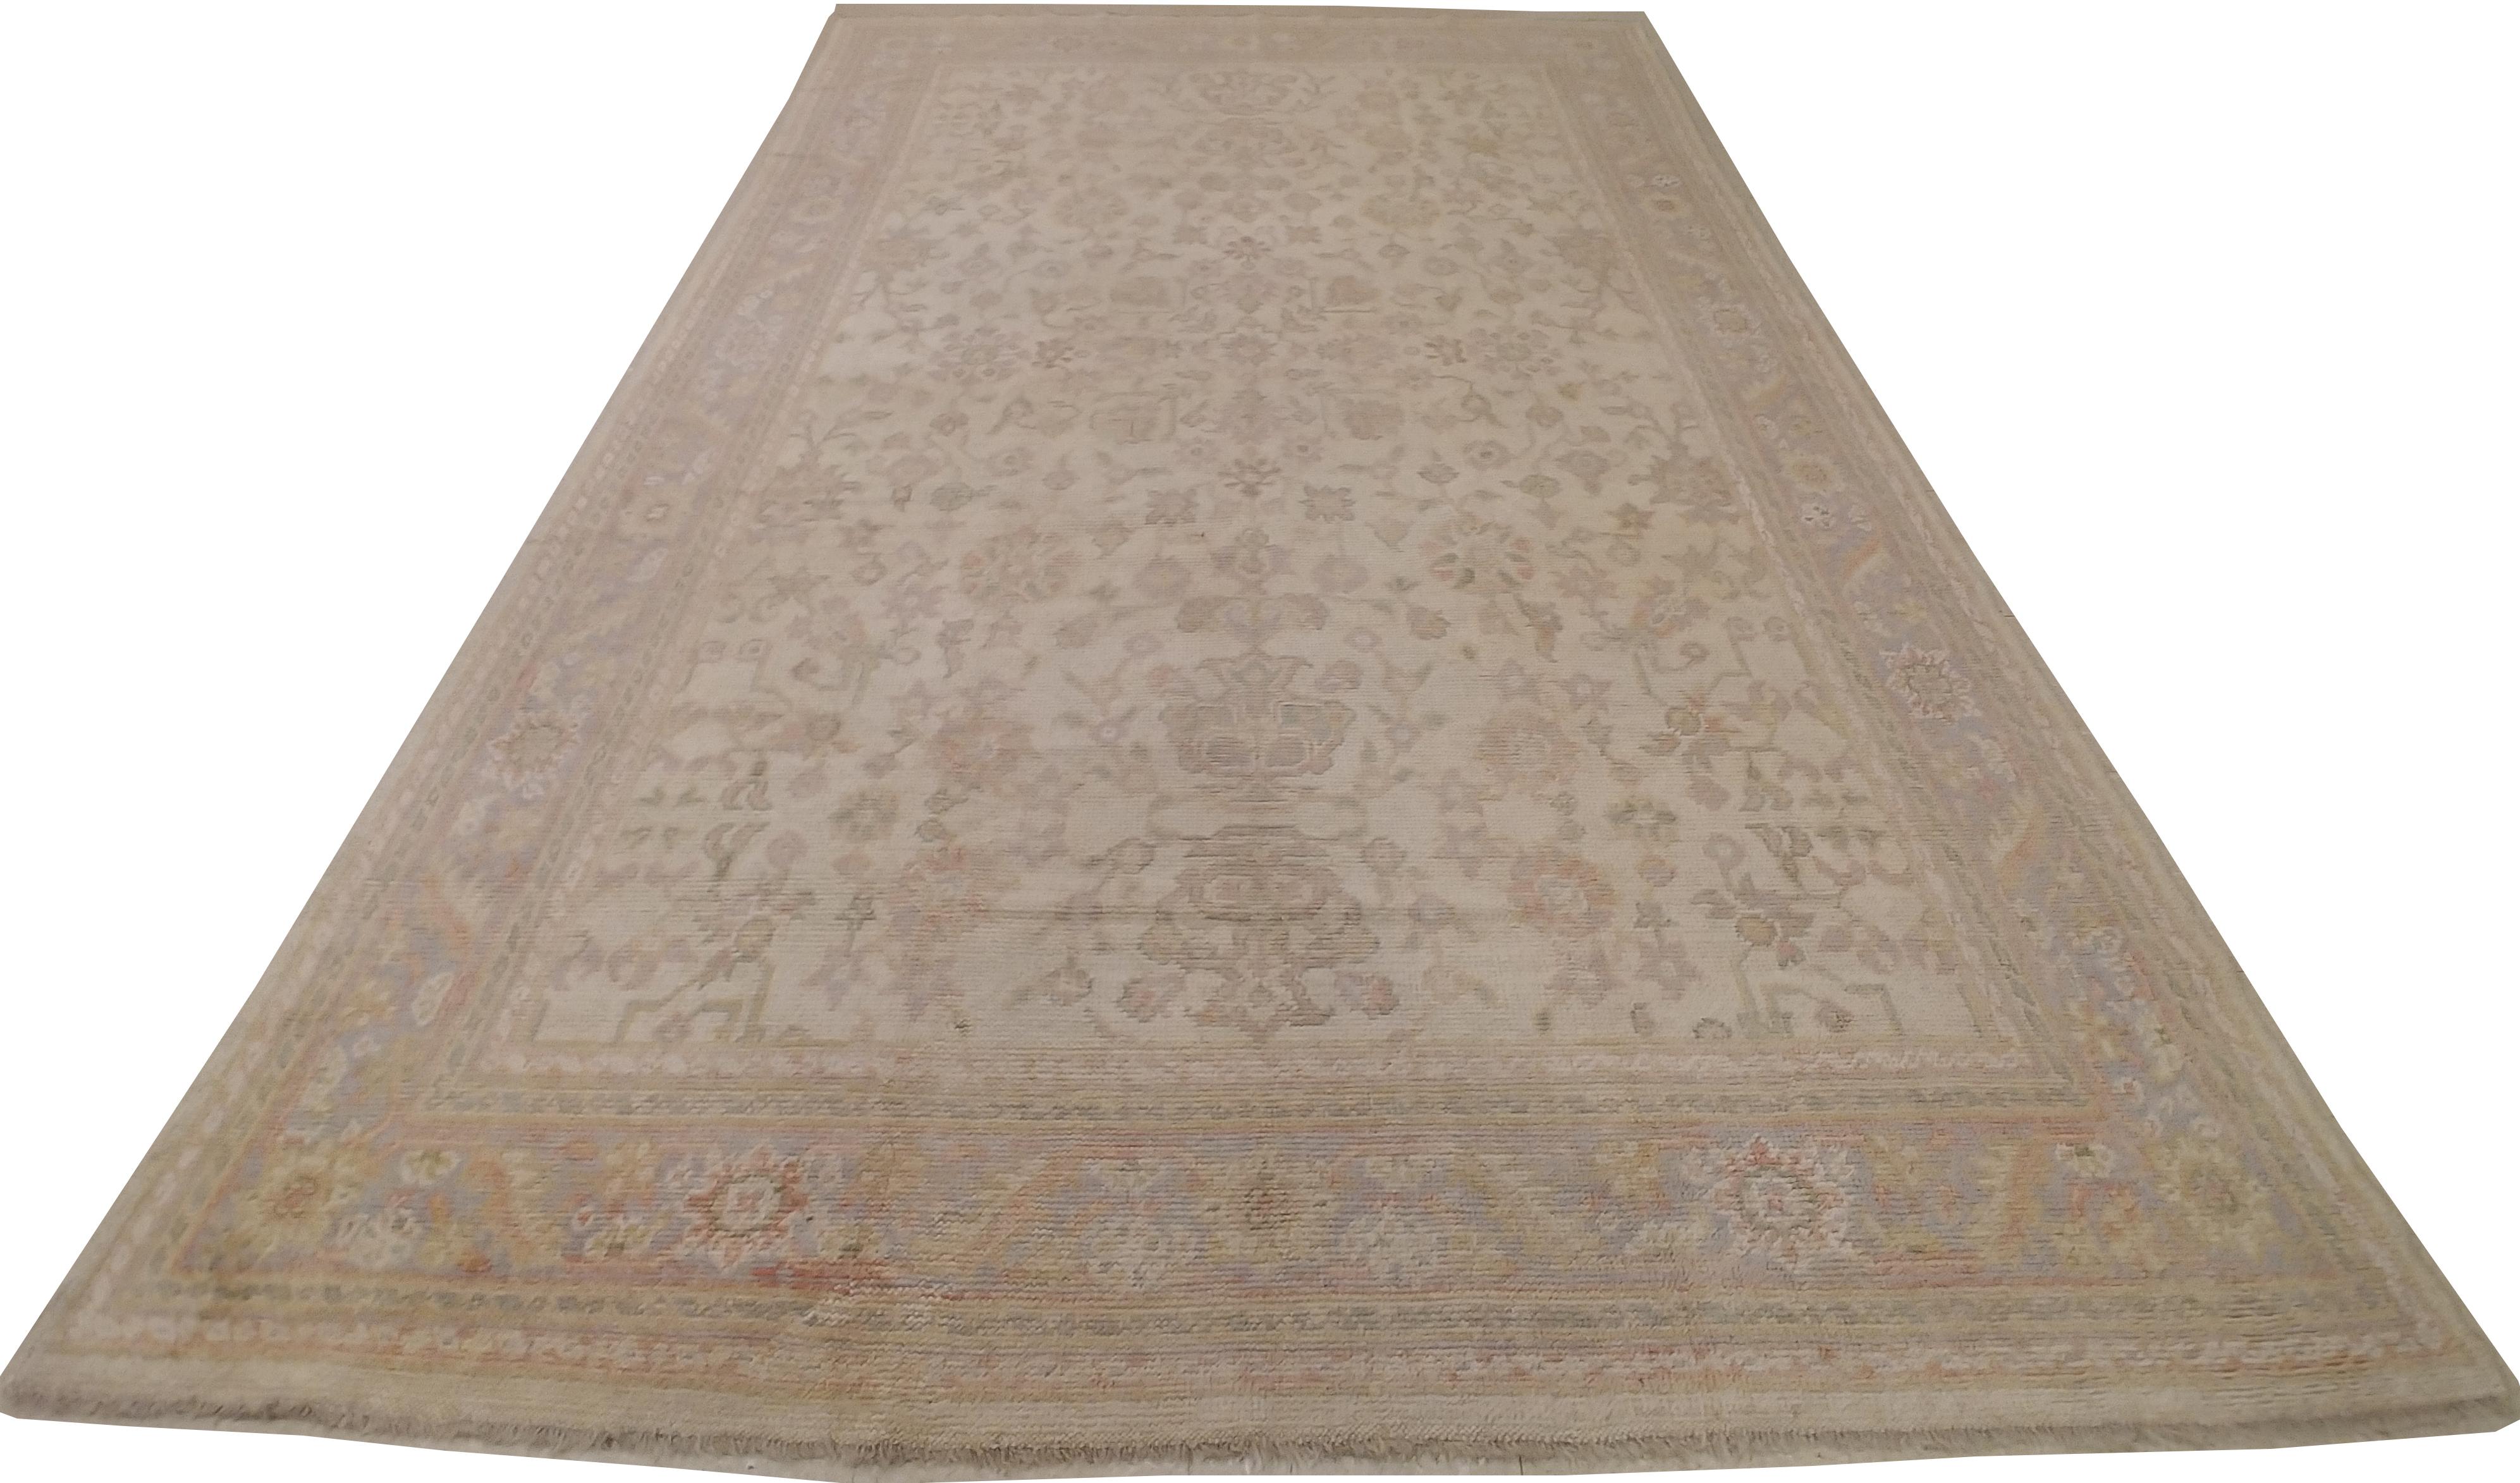 Antique Oushak Carpet, Handmade Turkish Oriental Rug, Beige, Taupe, Soft For Sale 6